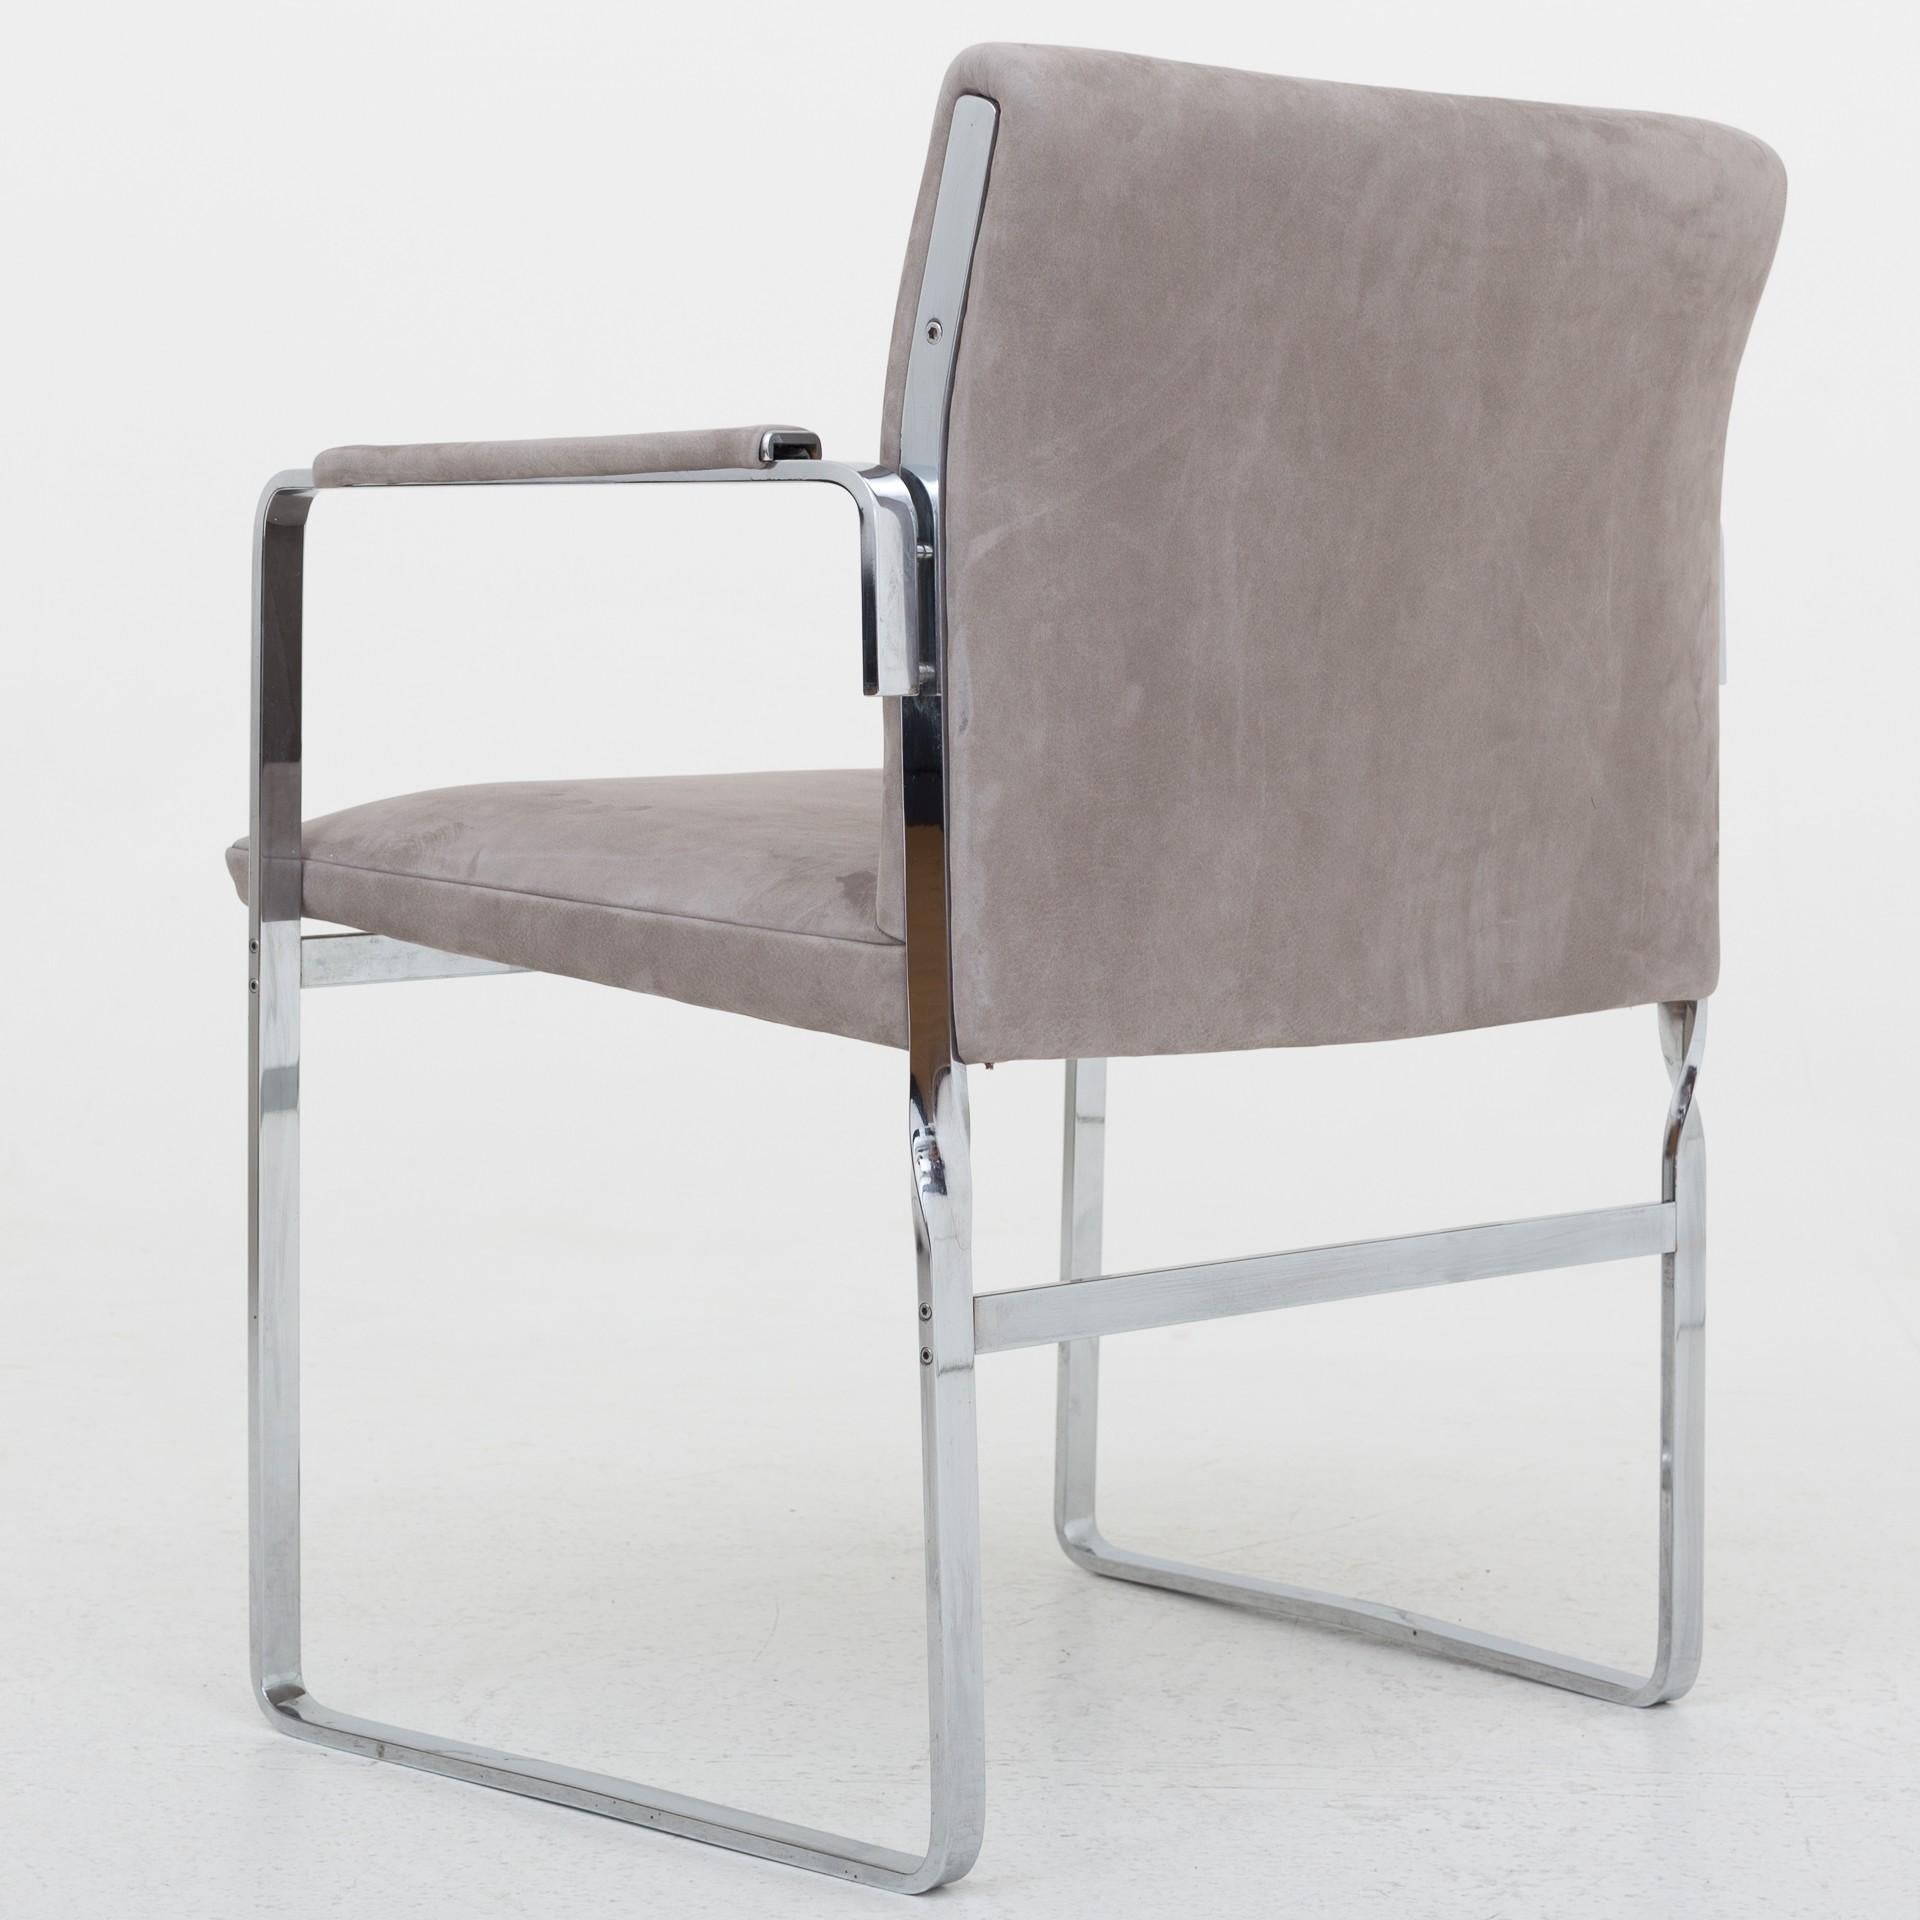 JH 811 - Reupholstered armchair in Royal Nubuck lava and steel frame. Maker Johannes Hansen.